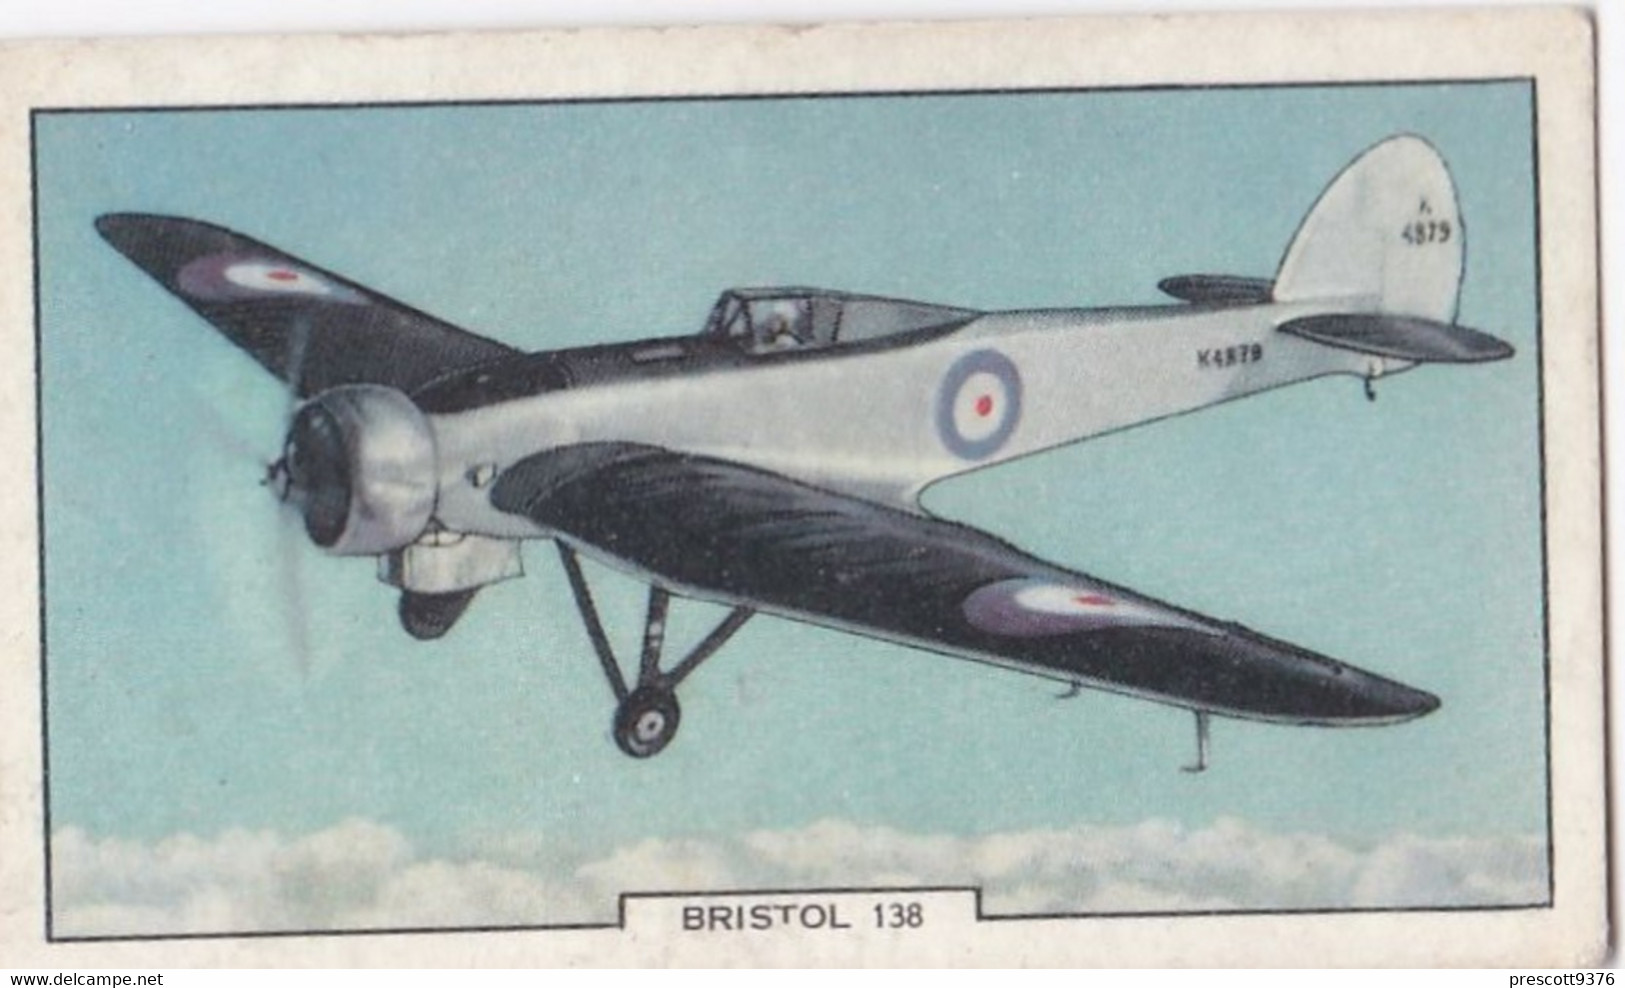 Aeroplanes 1939 - 39 Bristol 138 (High Altitude Record) - Gallaher Cigarette Card - Original, Military Aircraft - Gallaher